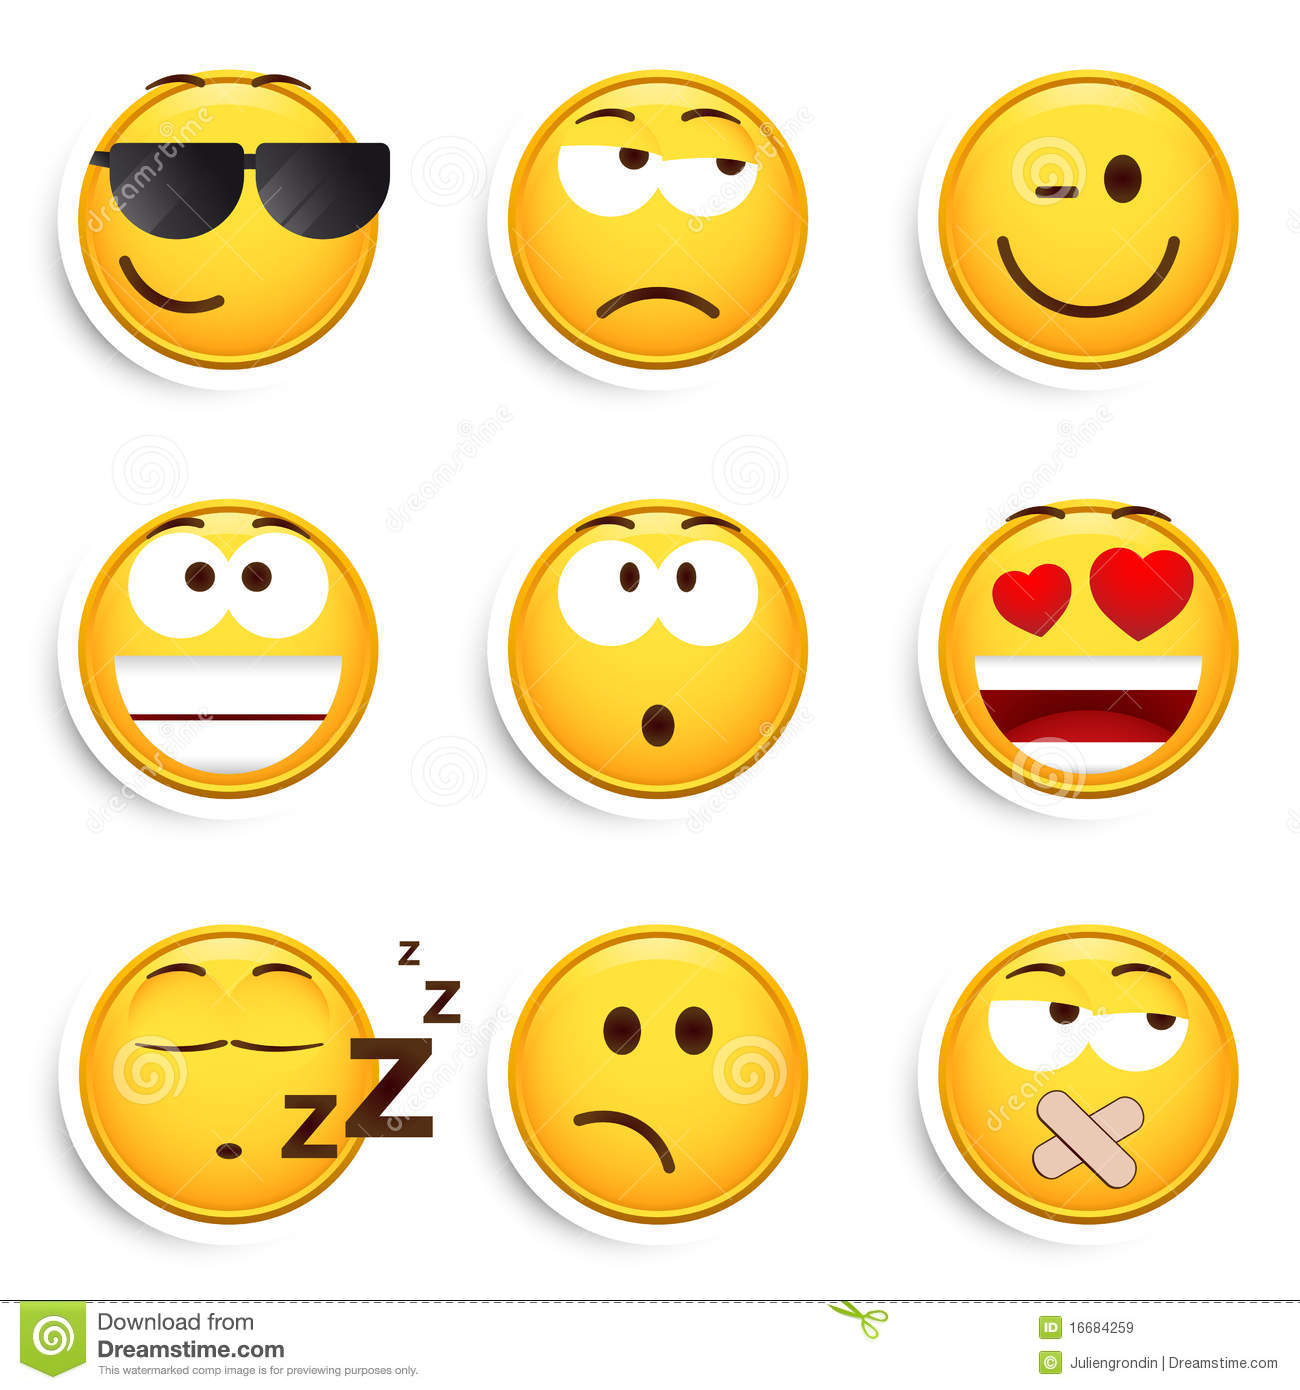 Free Smiley Faces Emoticons